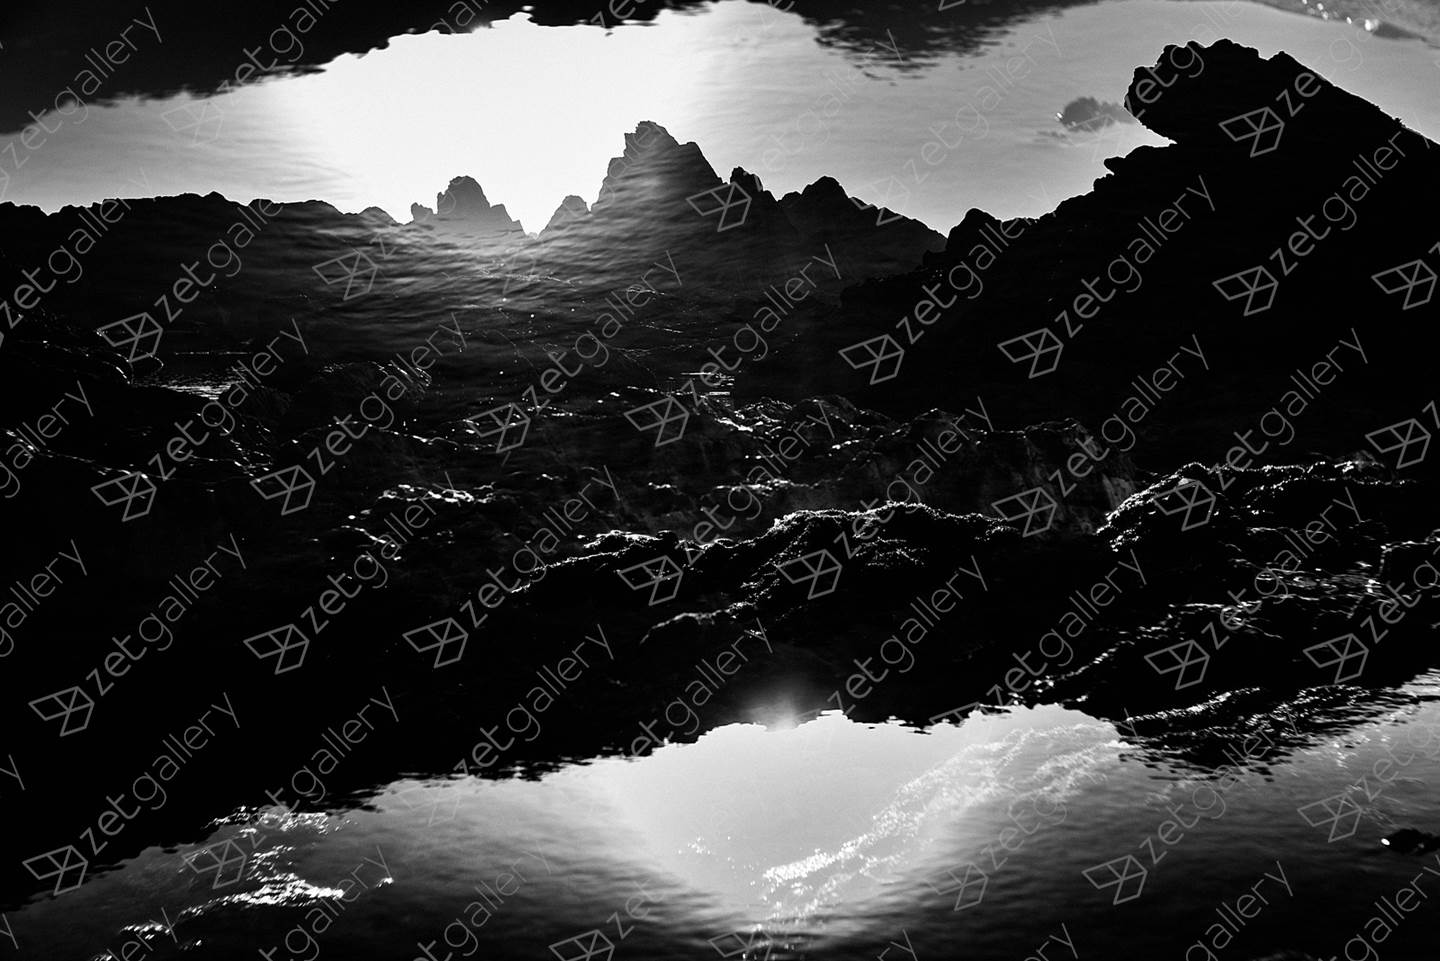 BLACK MIRROR, original Abstract Digital Photography by Ricardo Santiago Alves